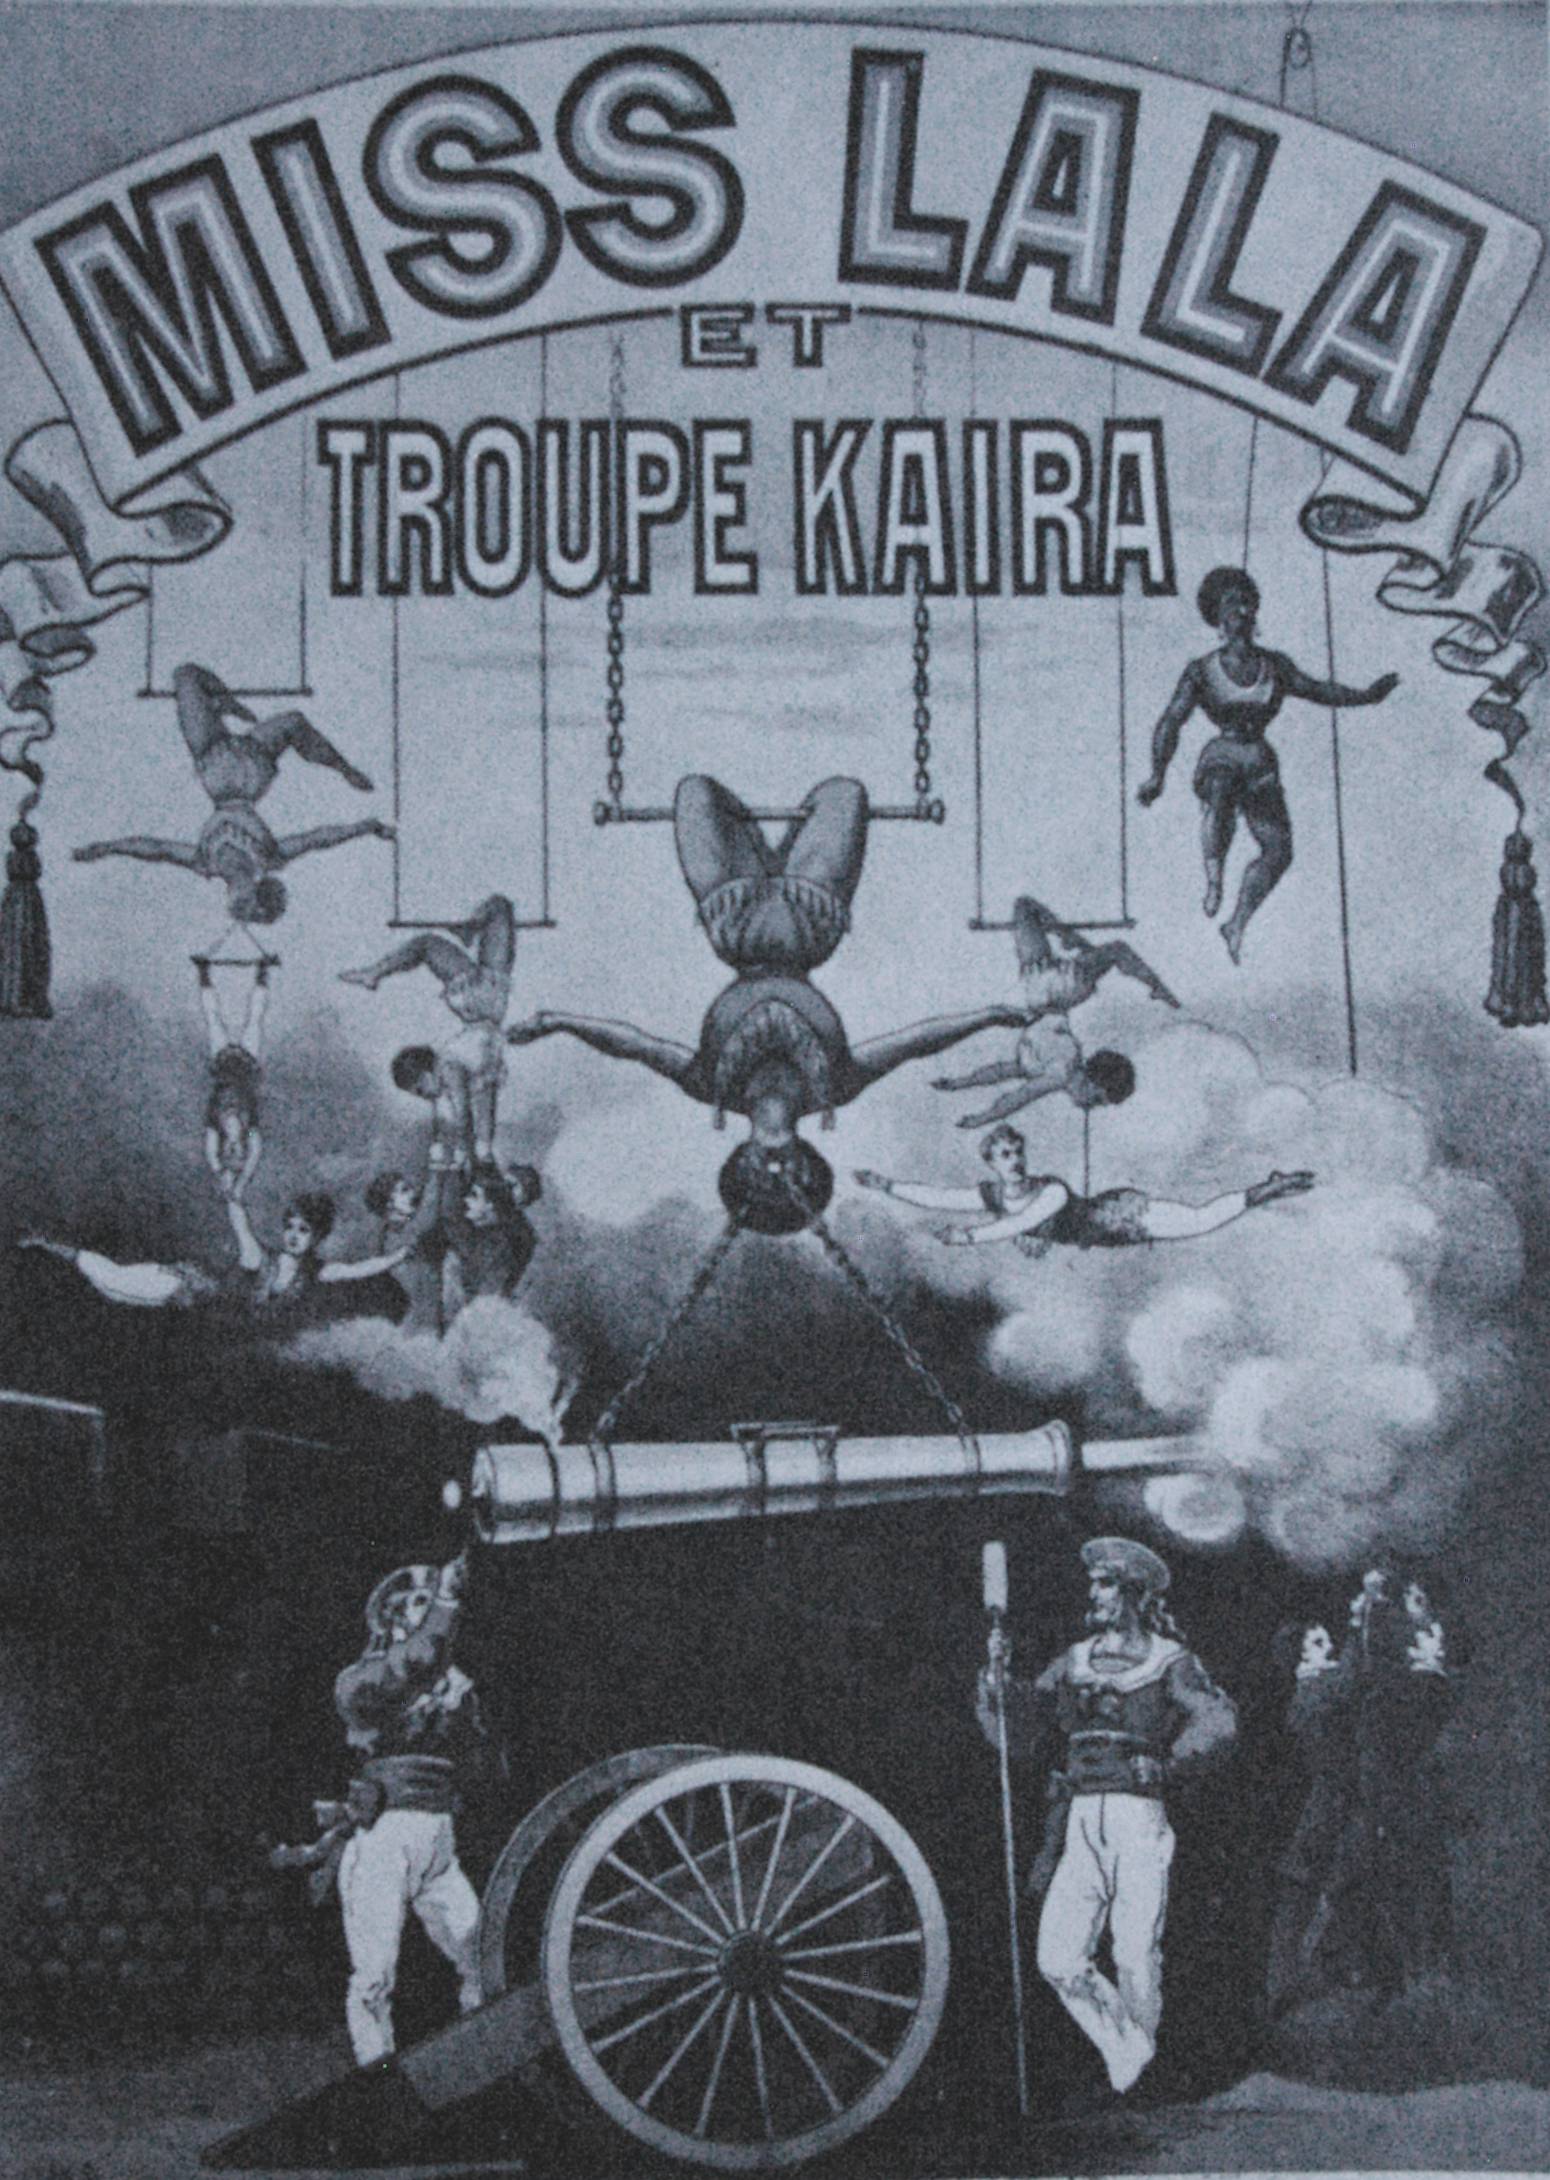 Miss La La on a circus poster for Troupe Kaira